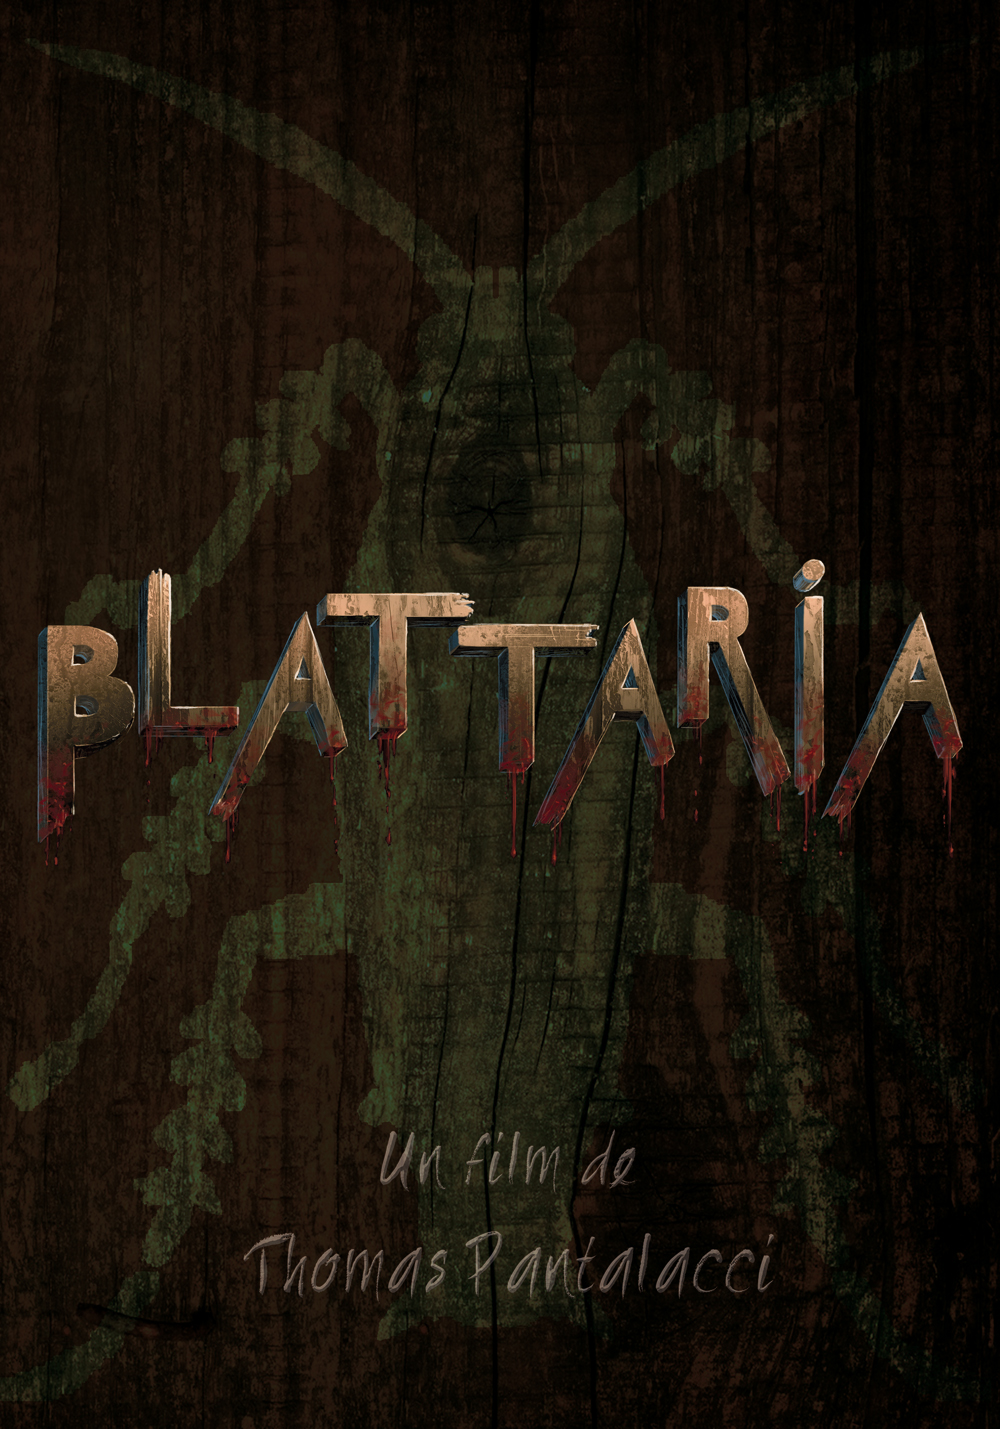 BLATTARIA, un projet qui a besoin de vous!